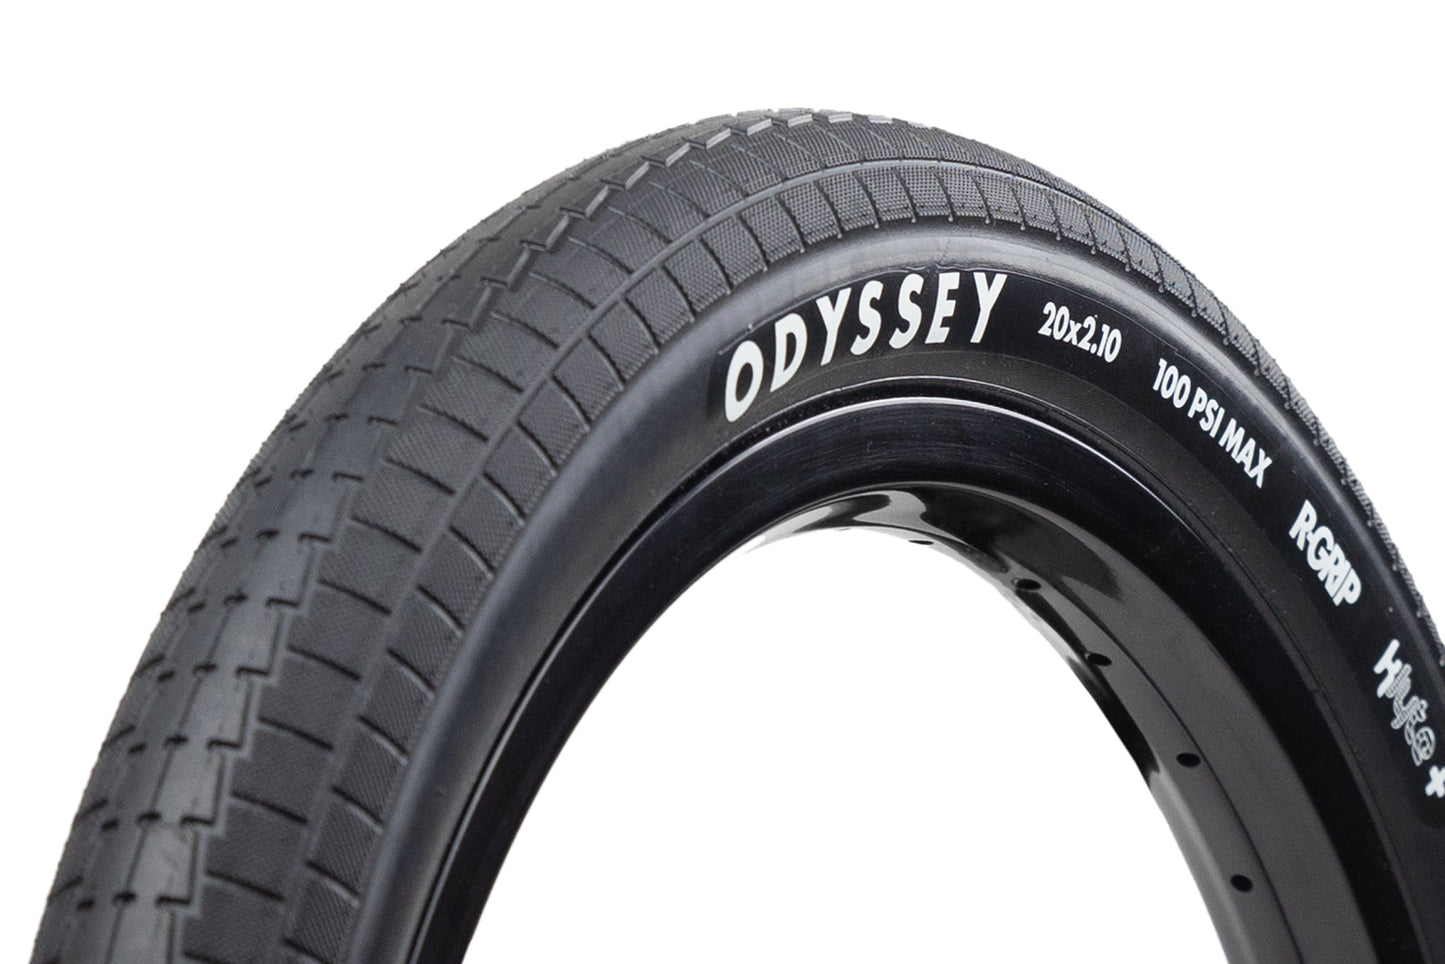 Odyssey Super Circuit Tire